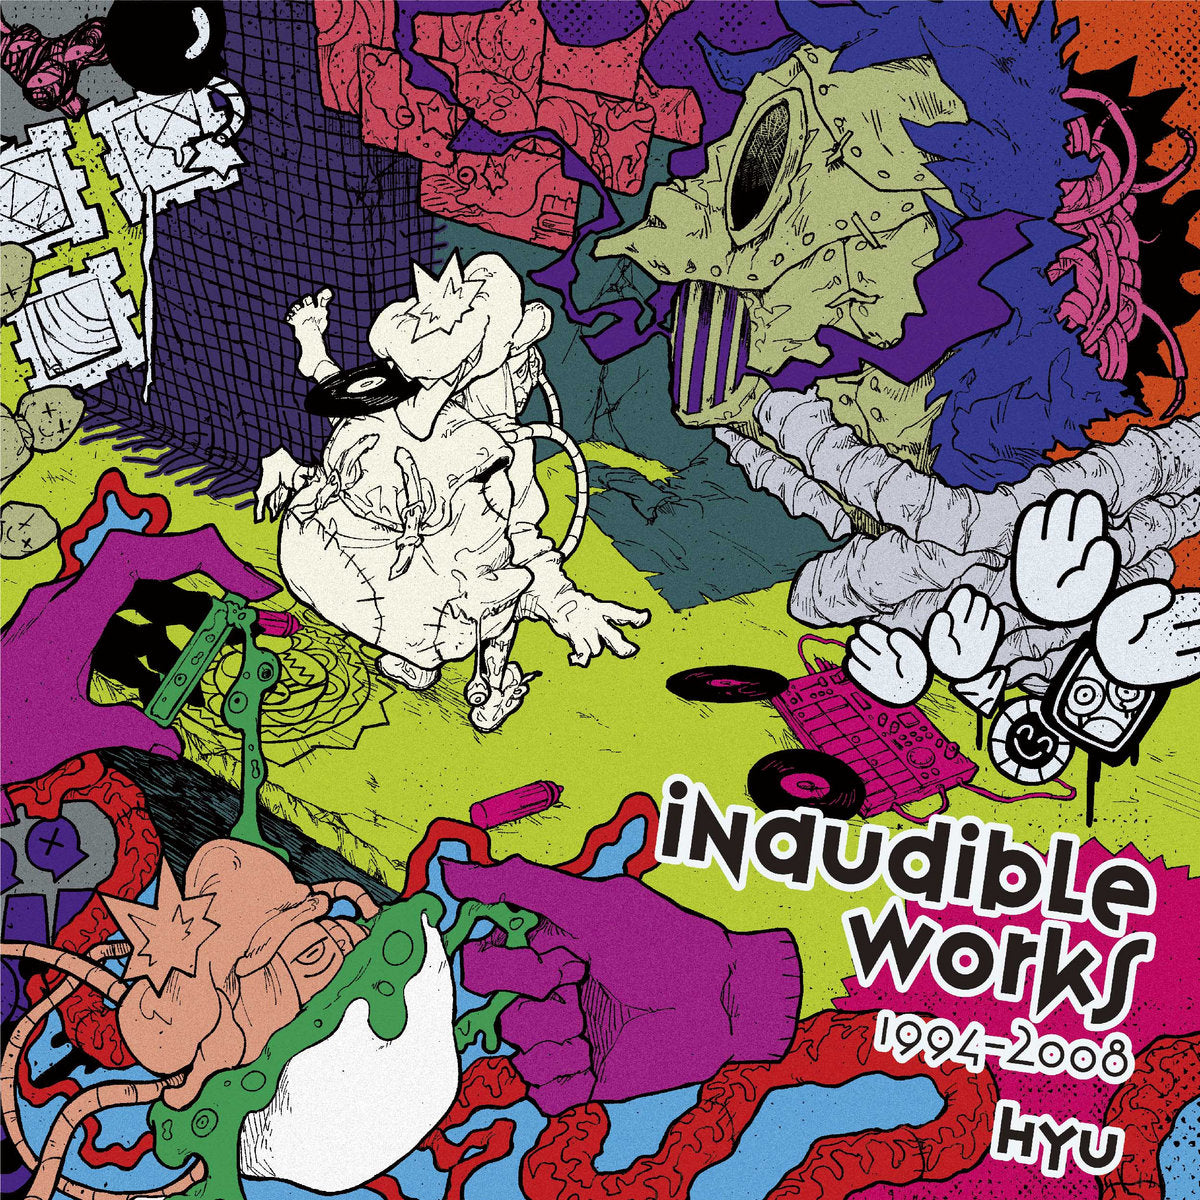 【LP】Hyu - Inaudible Works 1994-2008 -2LP-